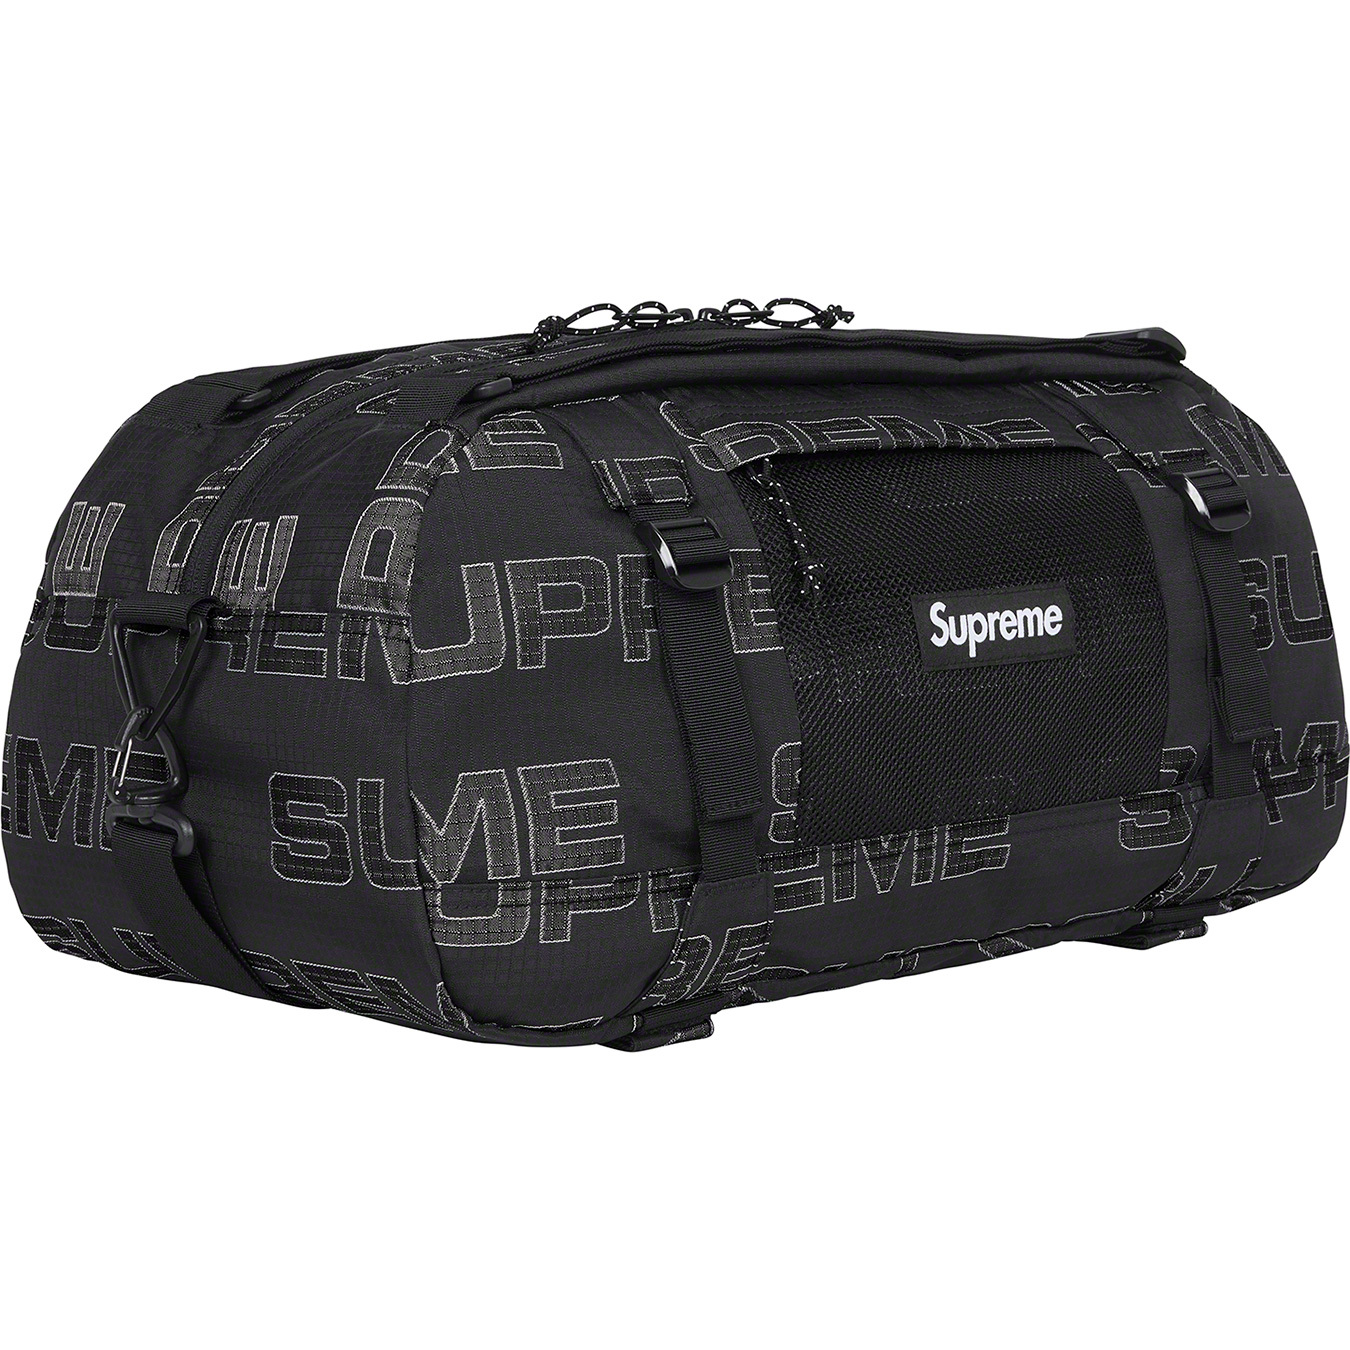 Supreme Duffle Bag Purple (FW21)